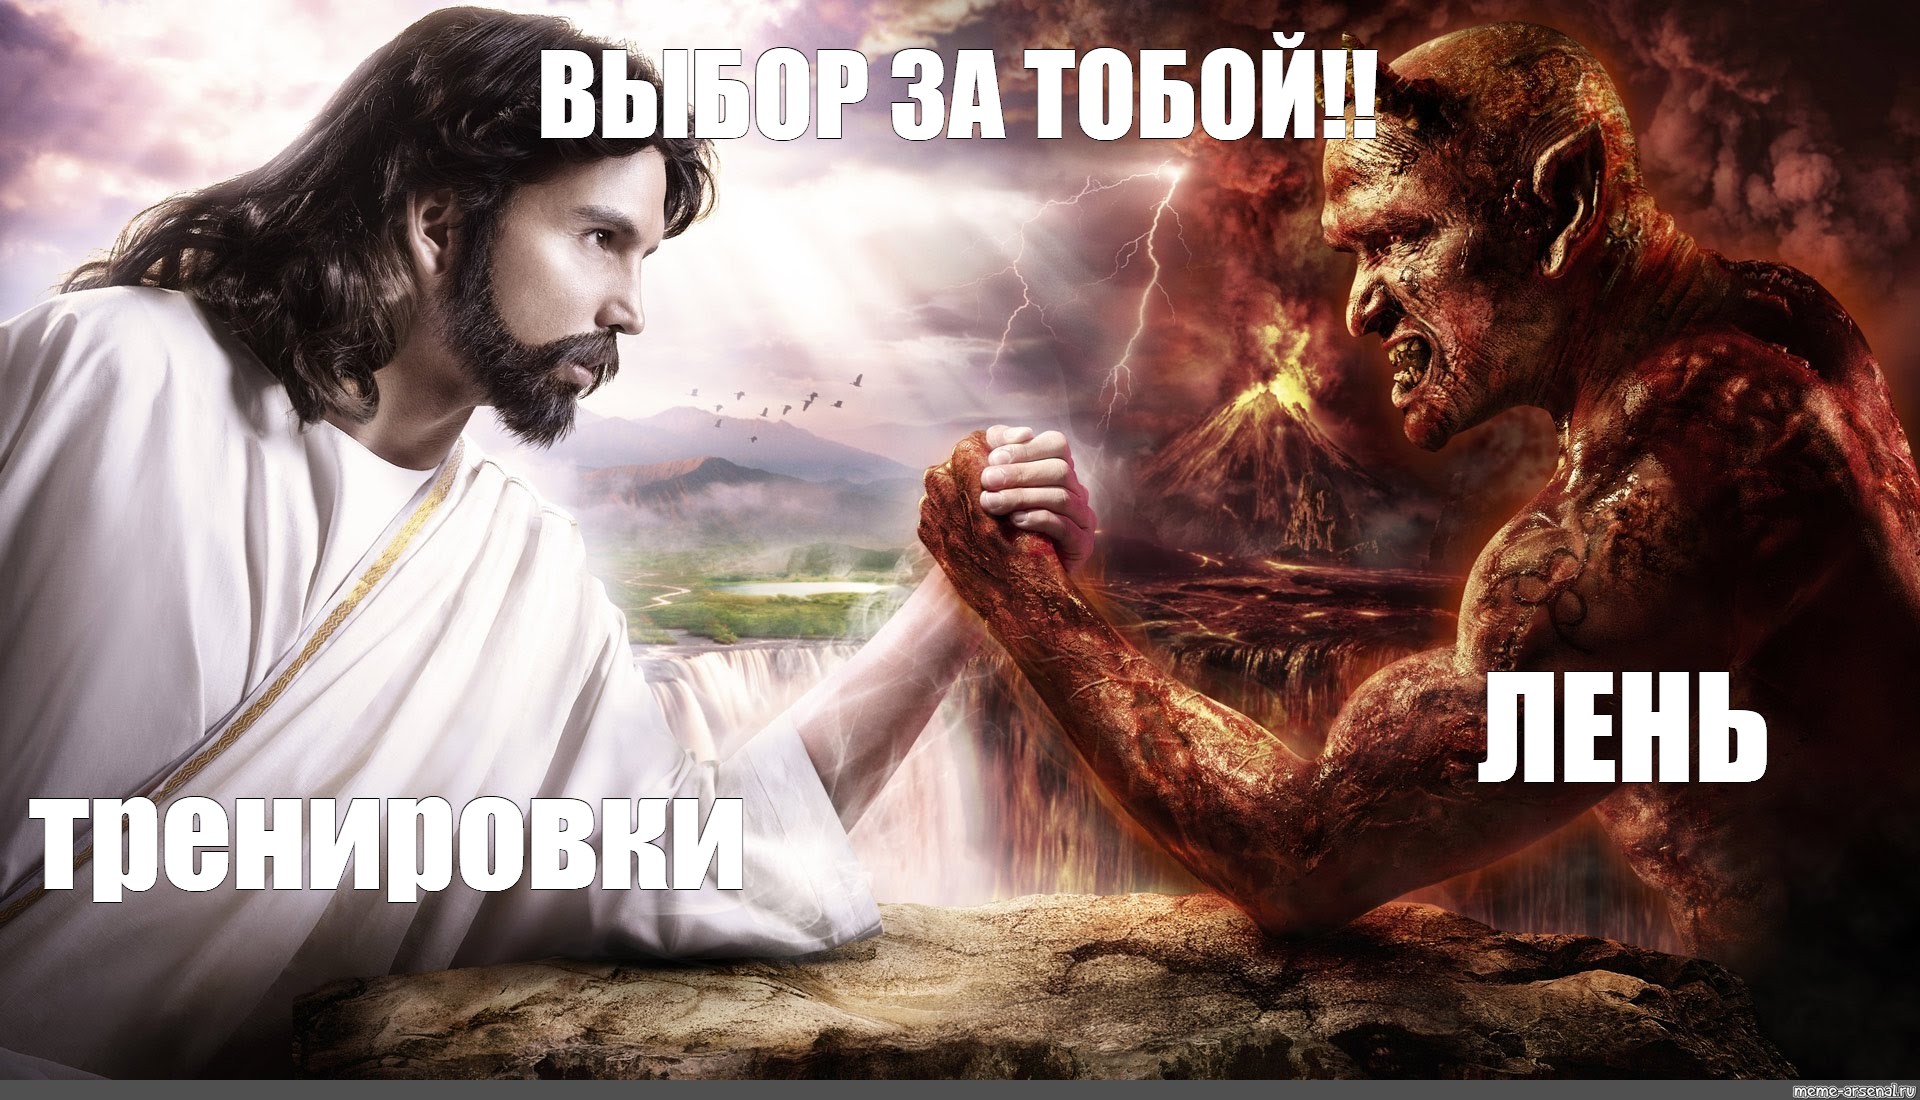 Бог против зла. Бог и дьявол. Бог против дьявола. Бог и сатана. Иисус против дьявола.